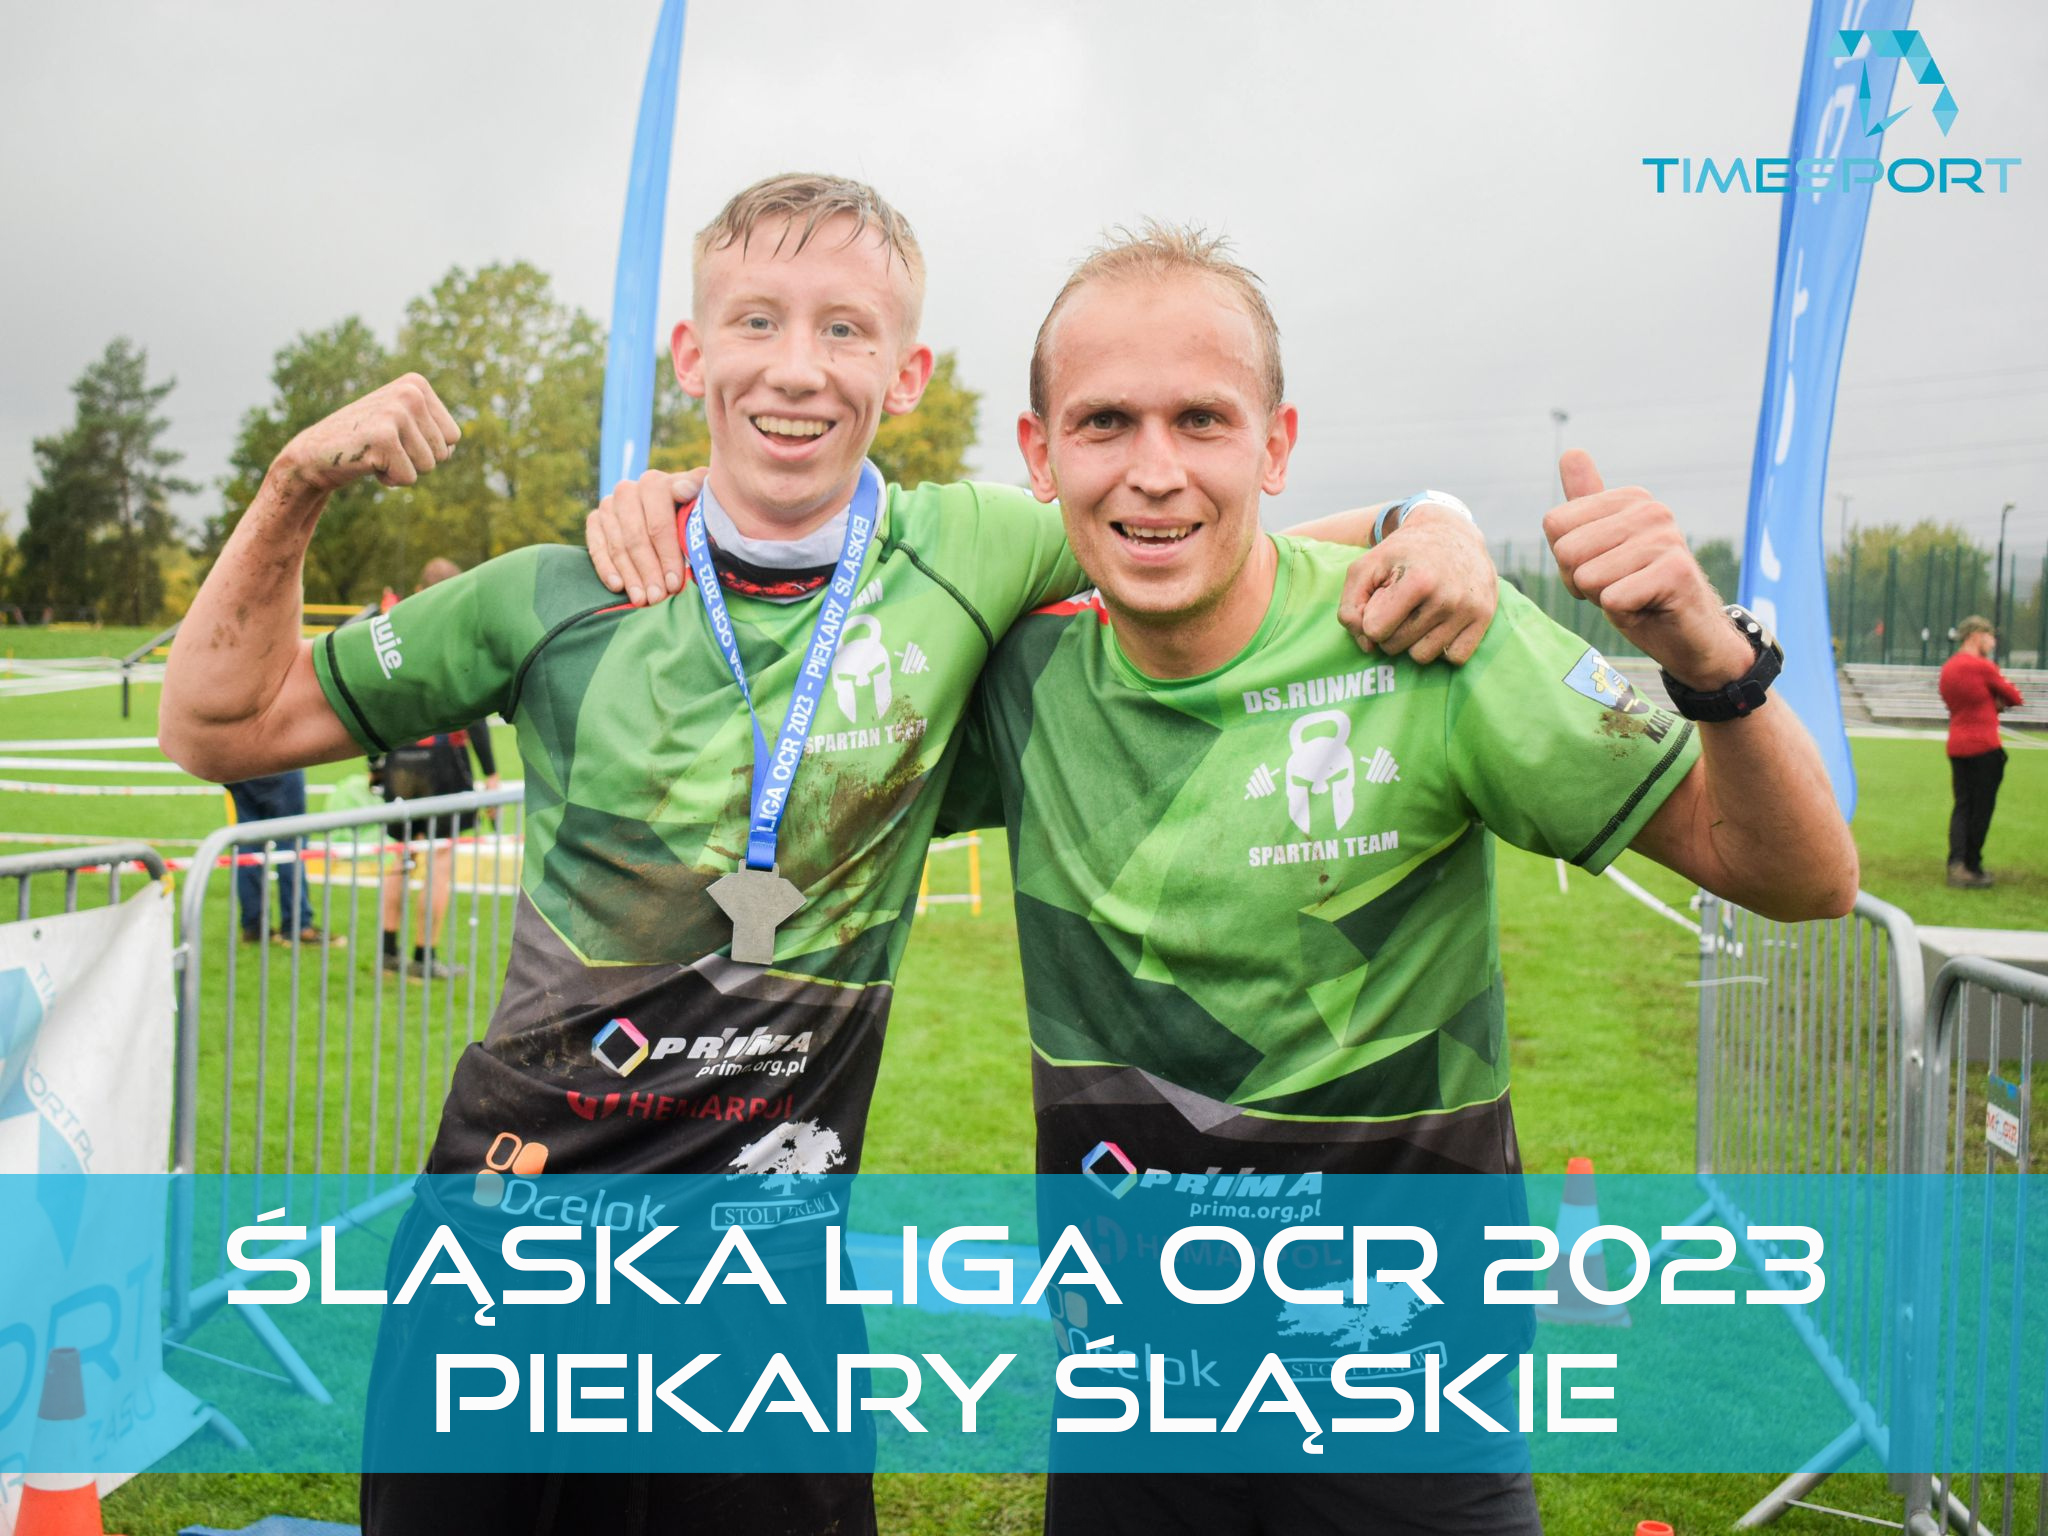 Śląska Liga OCR 2023 Piekary Śląskie